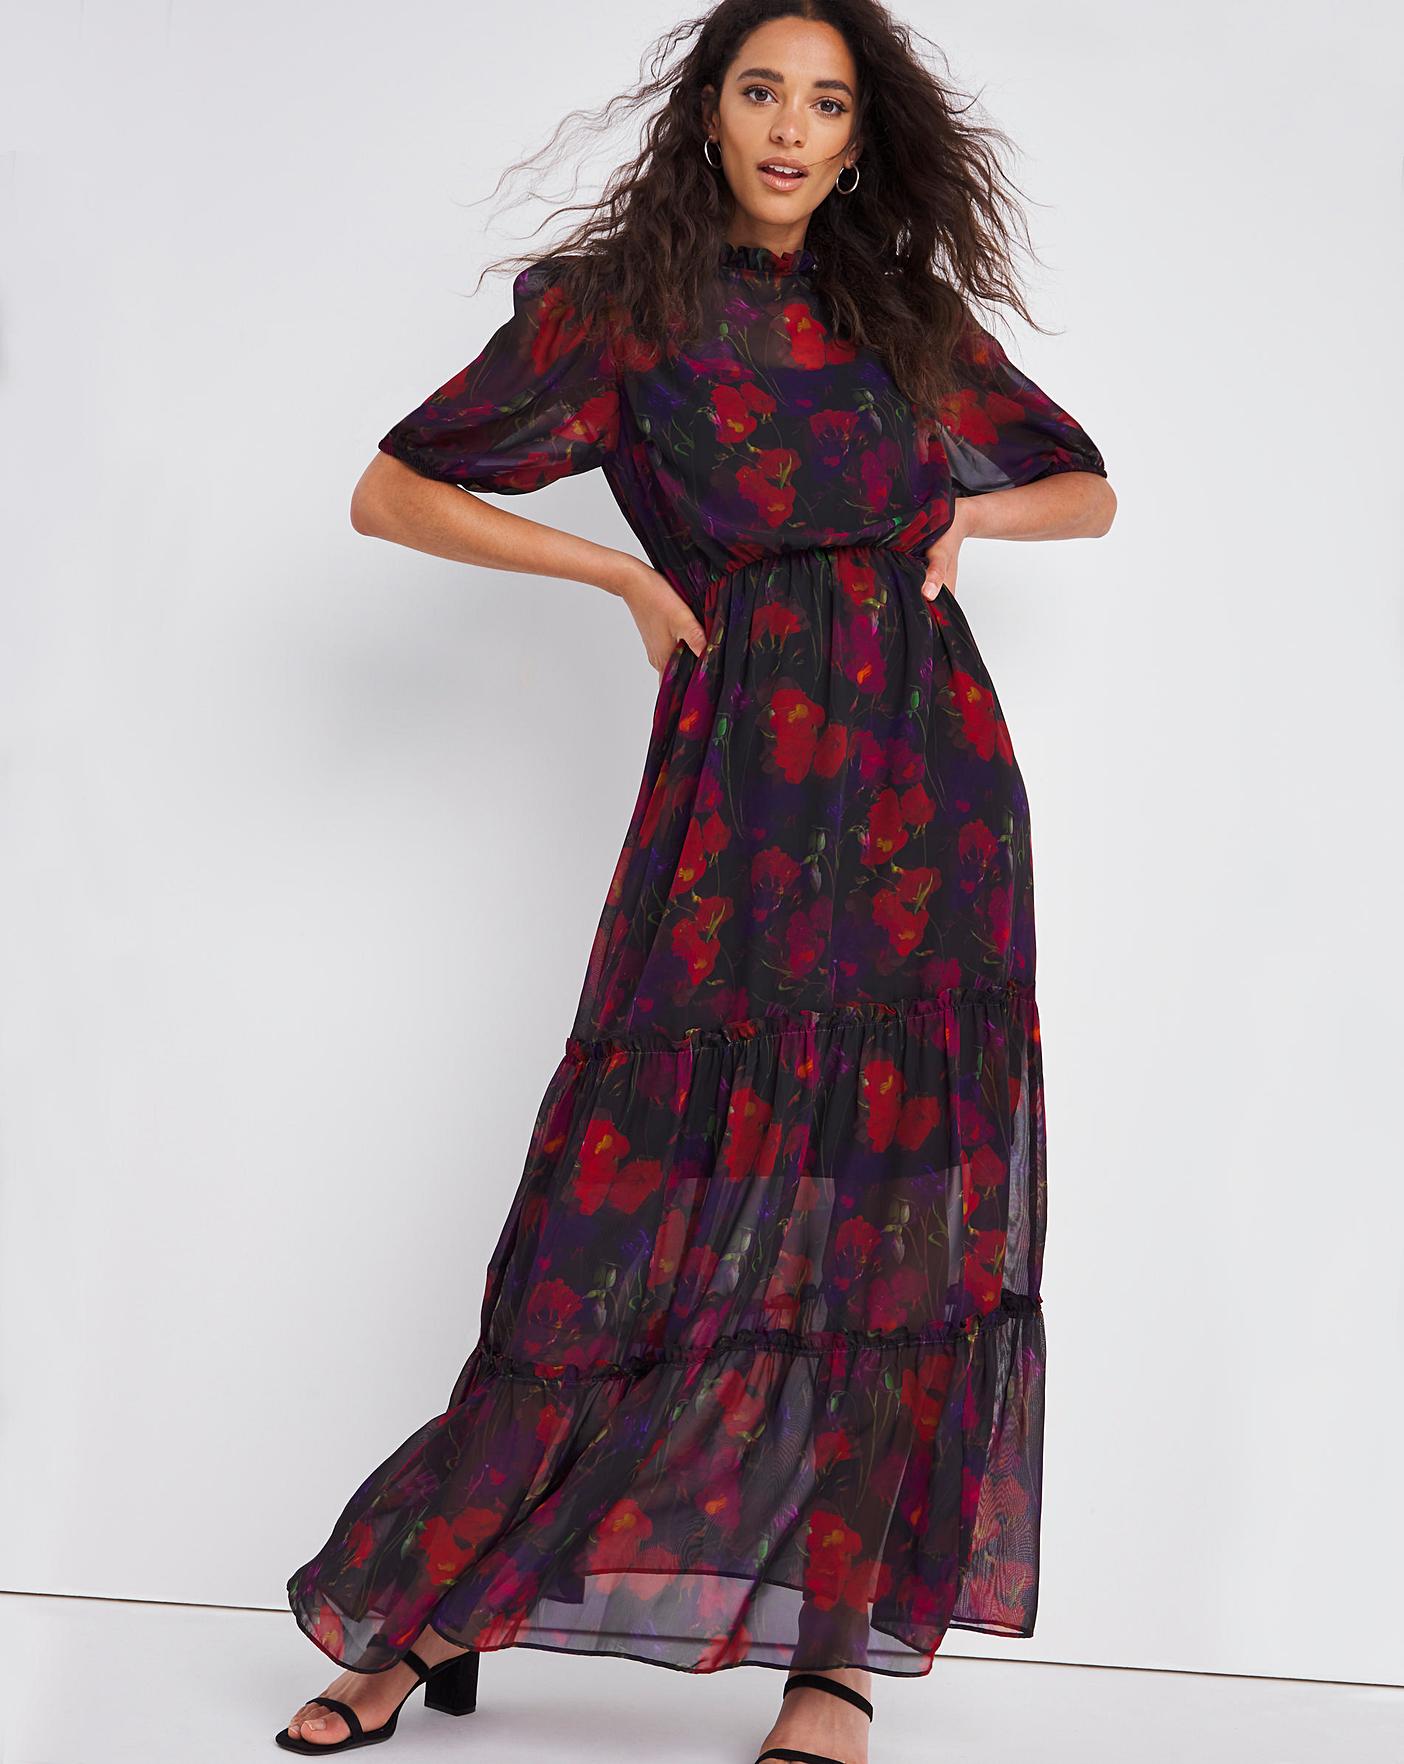 Joanna Hope Floral Print Maxi Dress ...